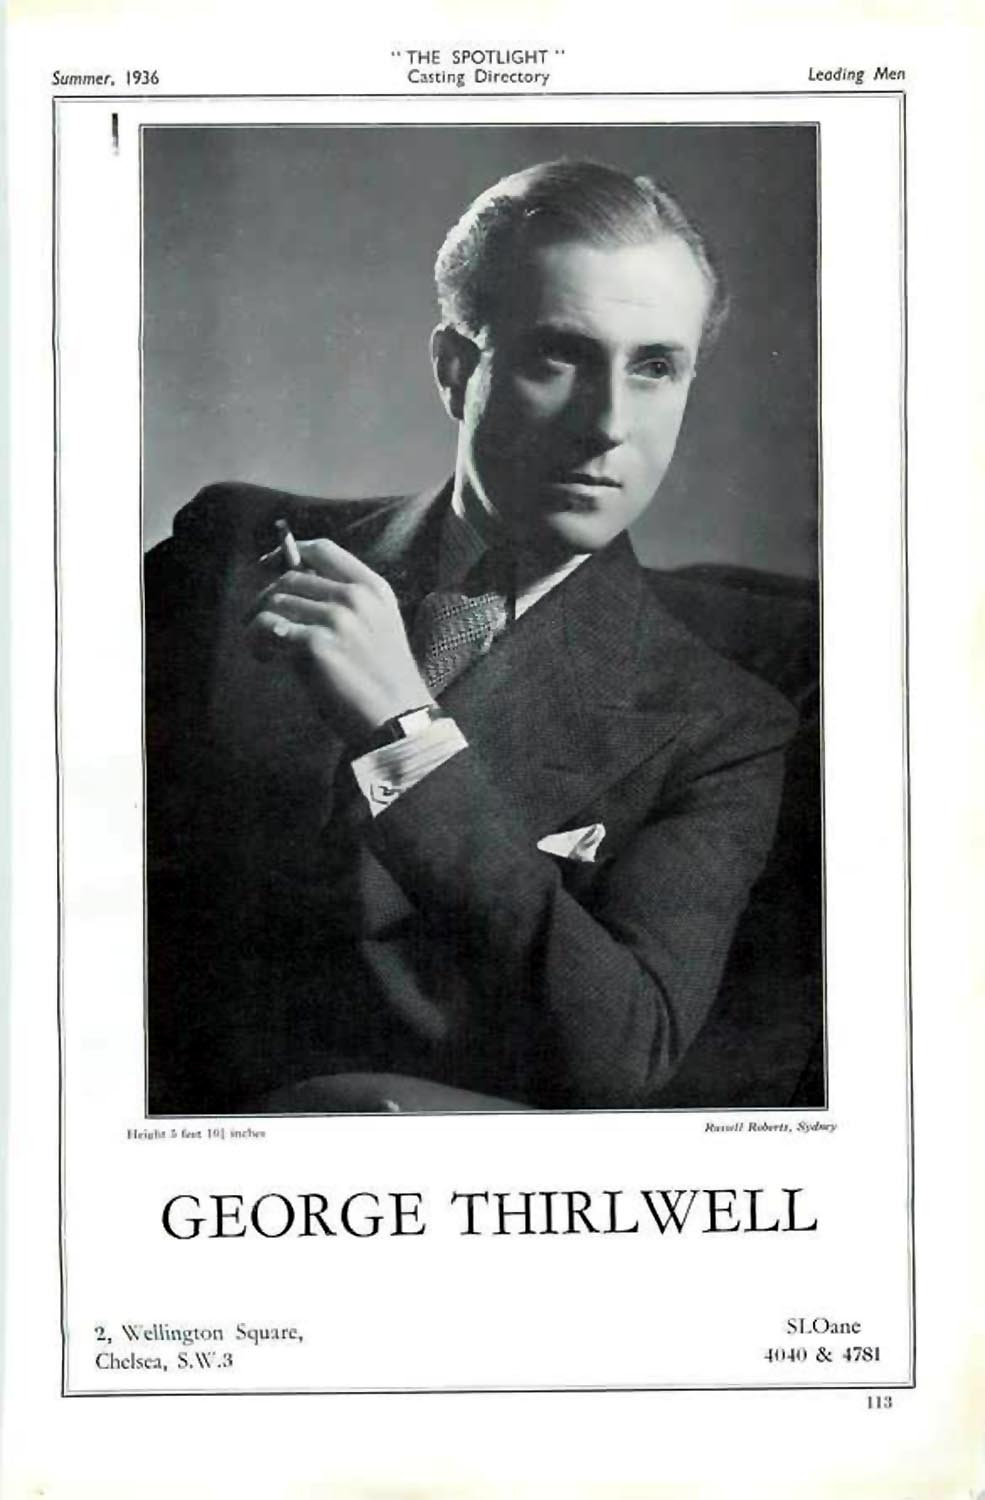 George Thirlwell